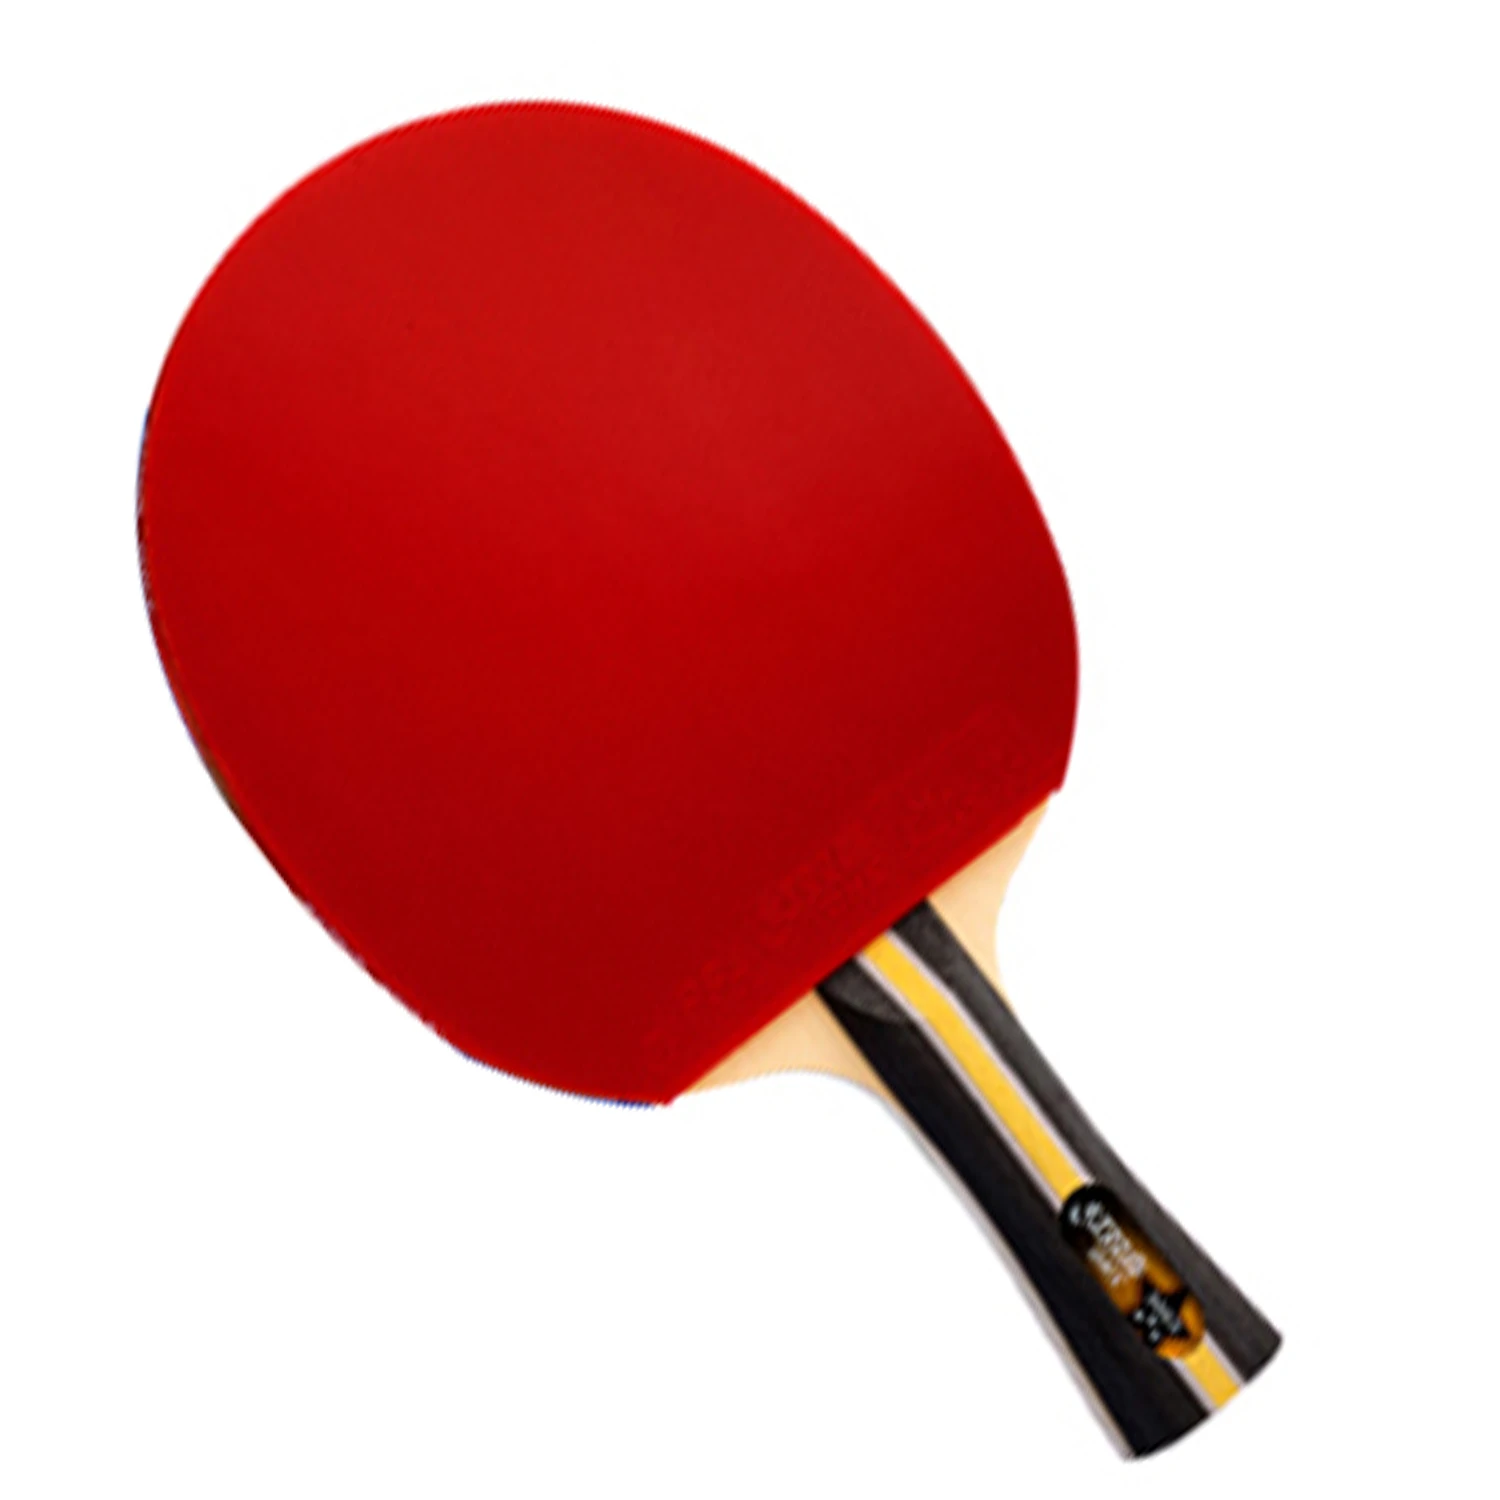 Semicírculo factible estético DHS T3003 T3007 raqueta de tenis de mesa raqueta terminada raqueta de ping  pong revés picos largos|Raquetas de tenis de mesa| - AliExpress